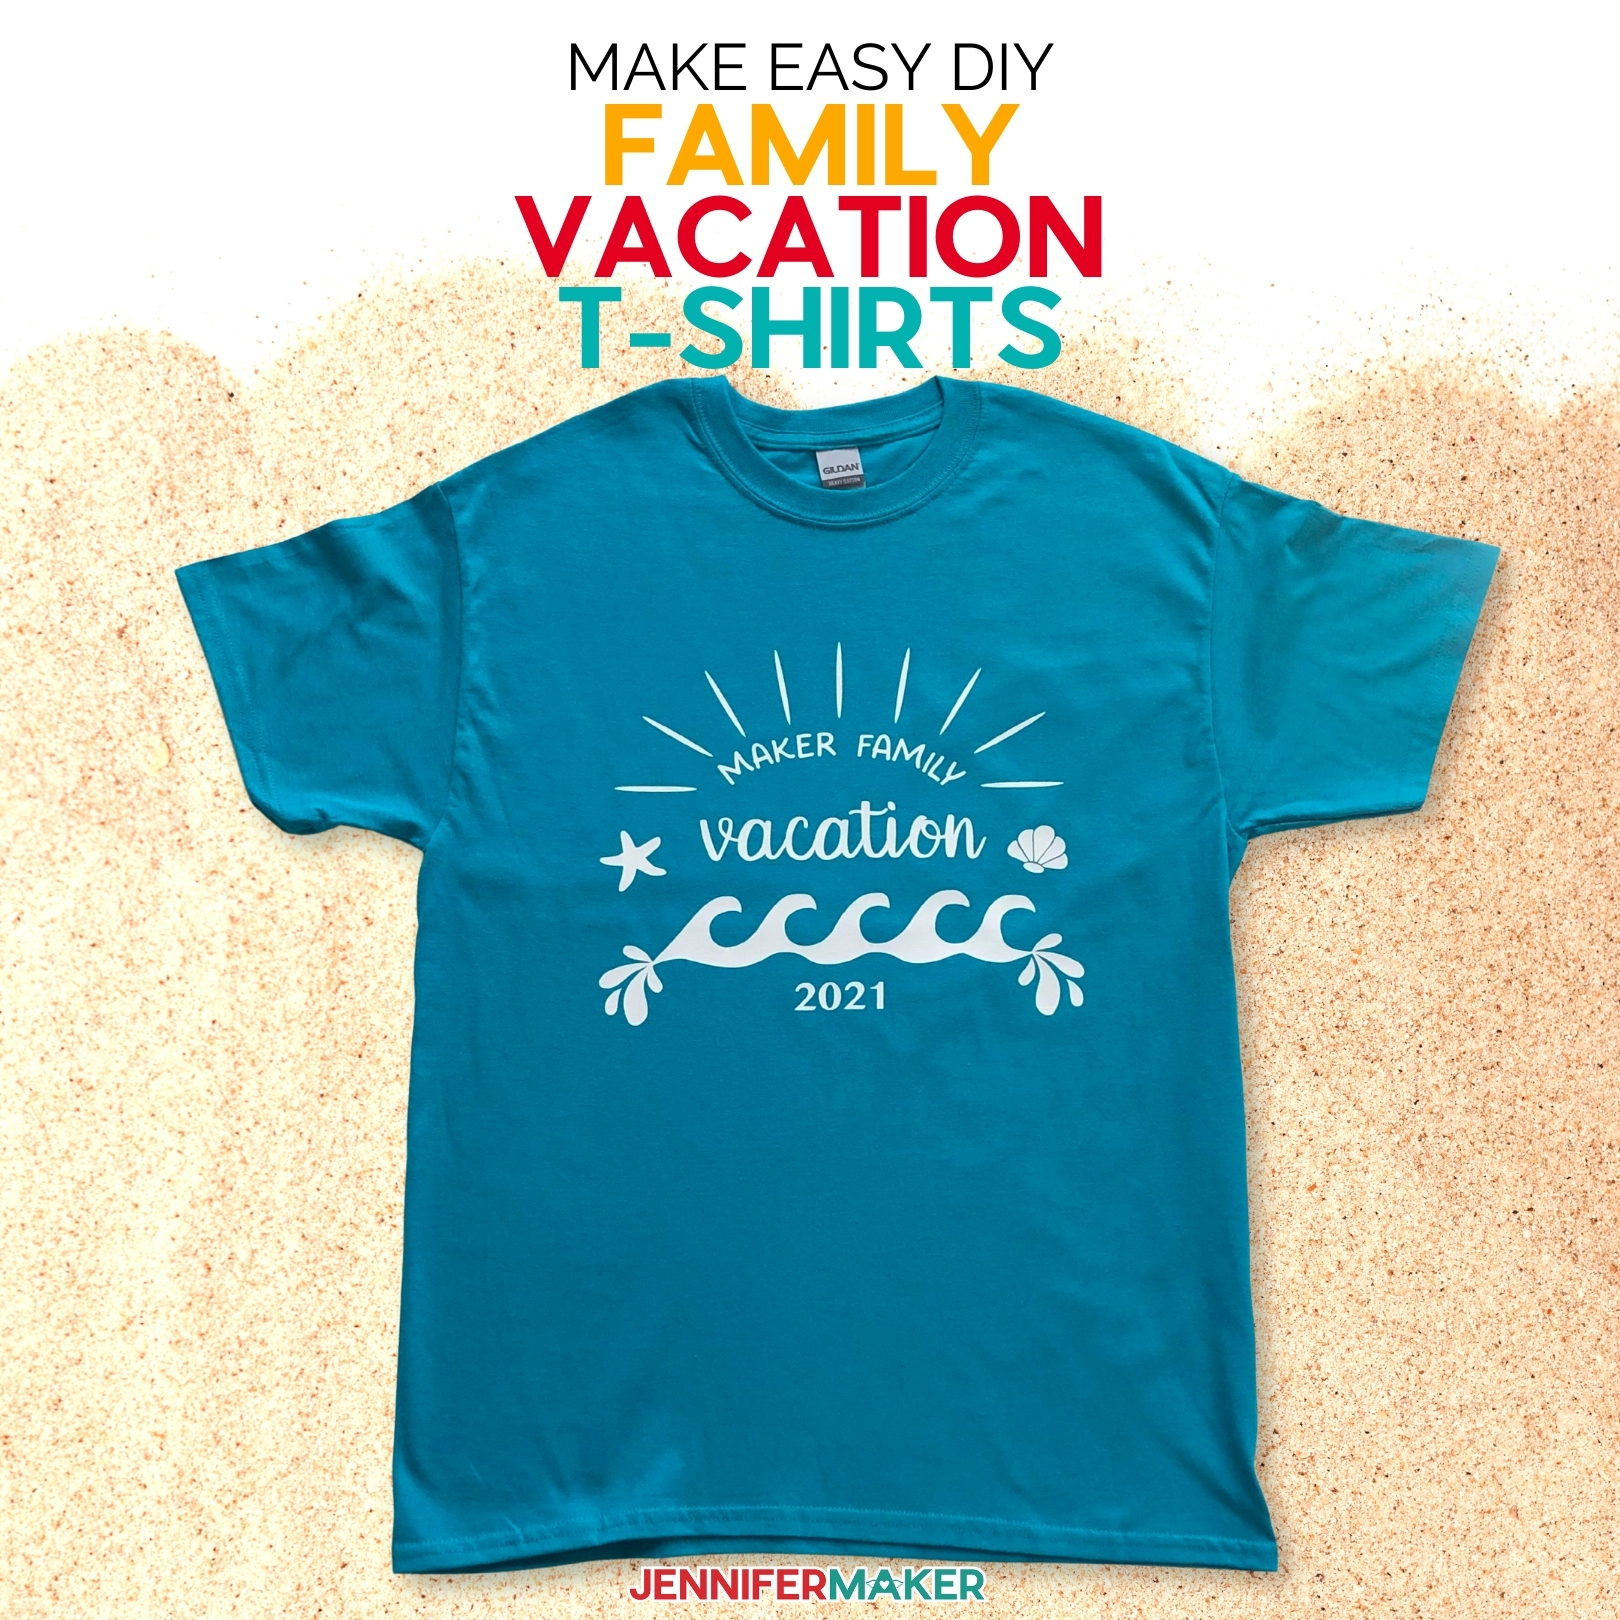 Make Fast & Easy DIY Family Vacation & Team Shirts